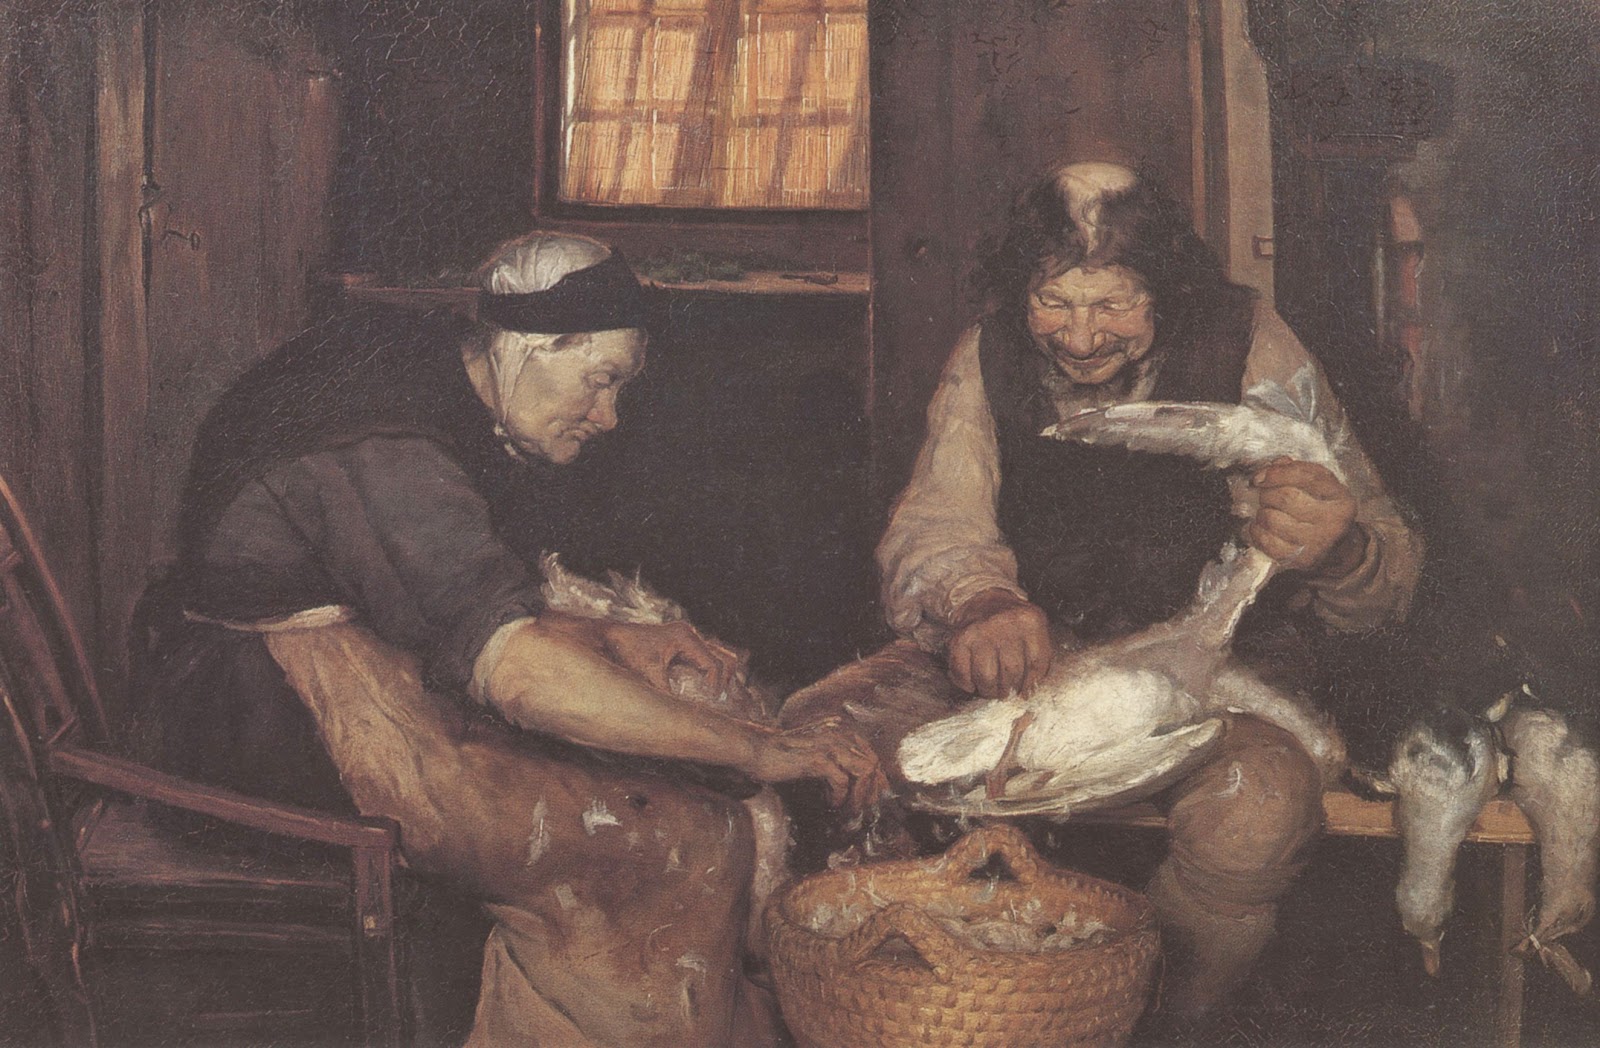 Anna+Ancher-1859-1935 (46).jpg